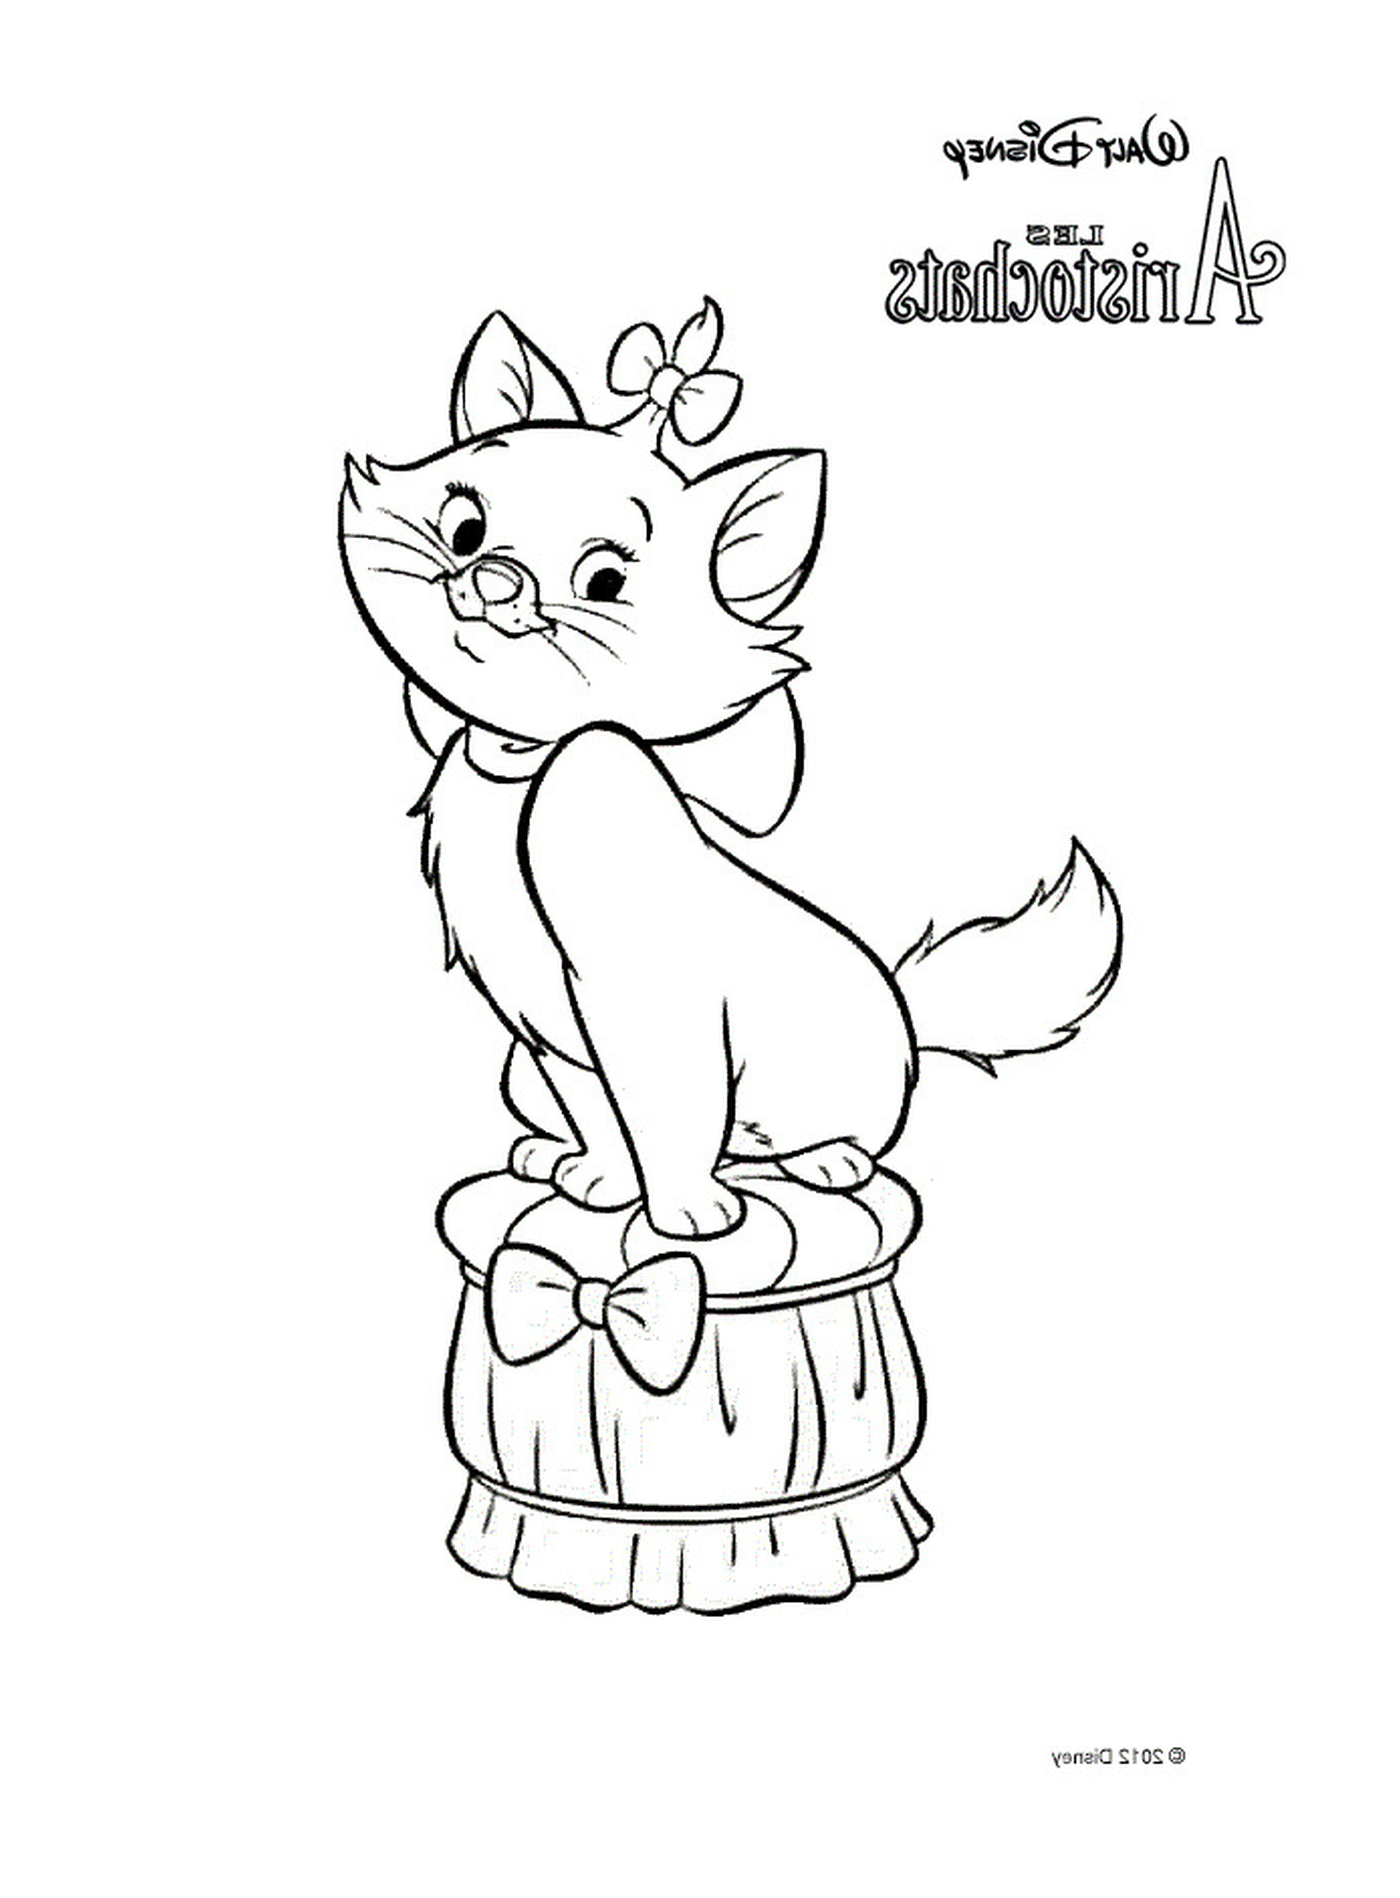  A cat sitting on a barrel 